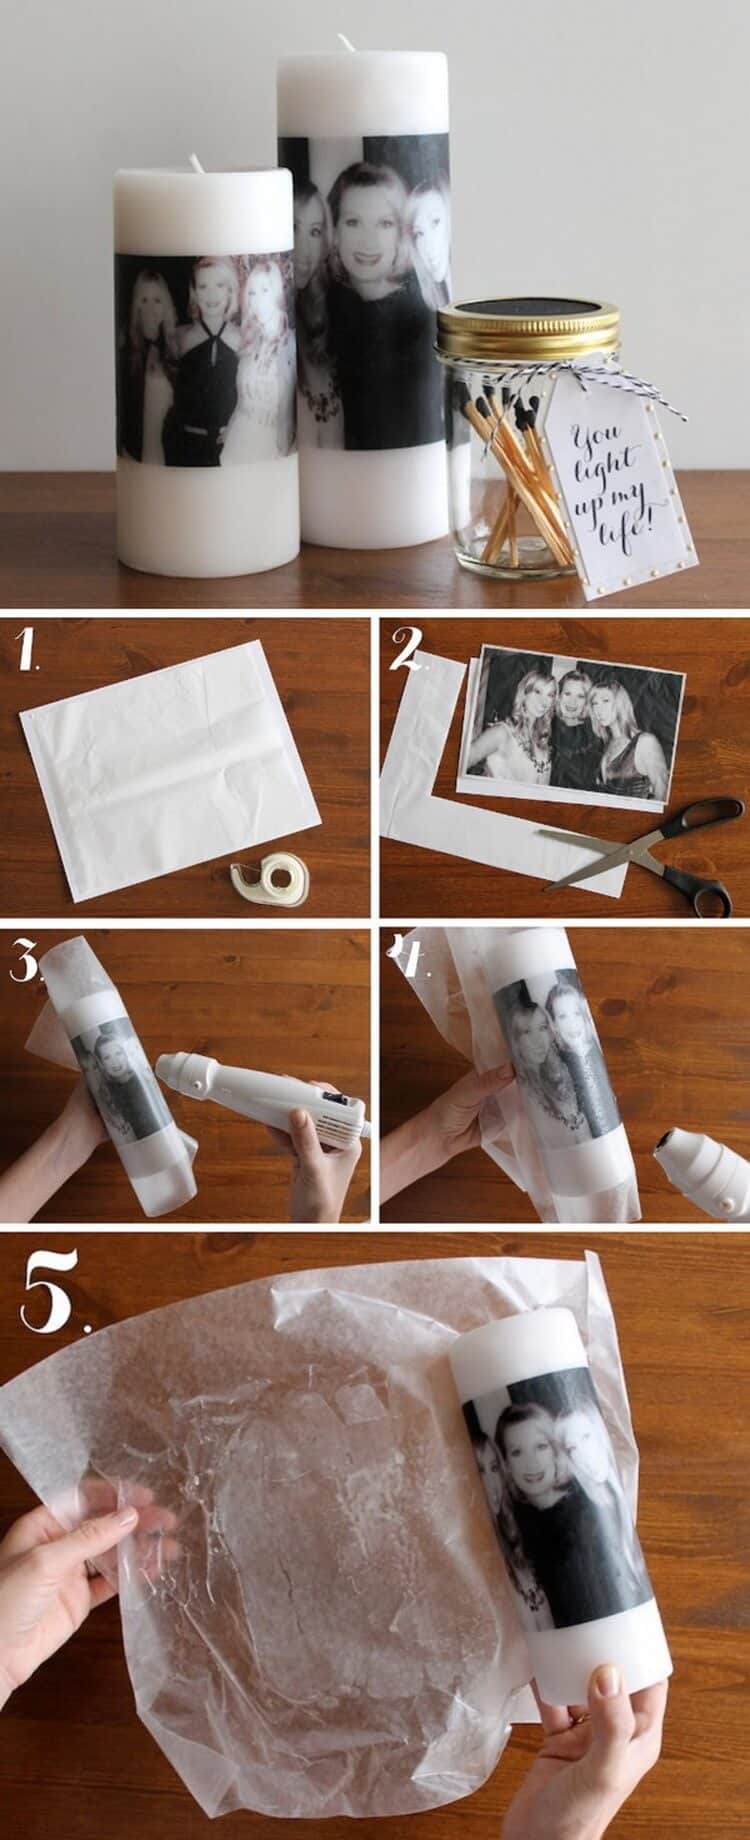 DIY Photo Candle